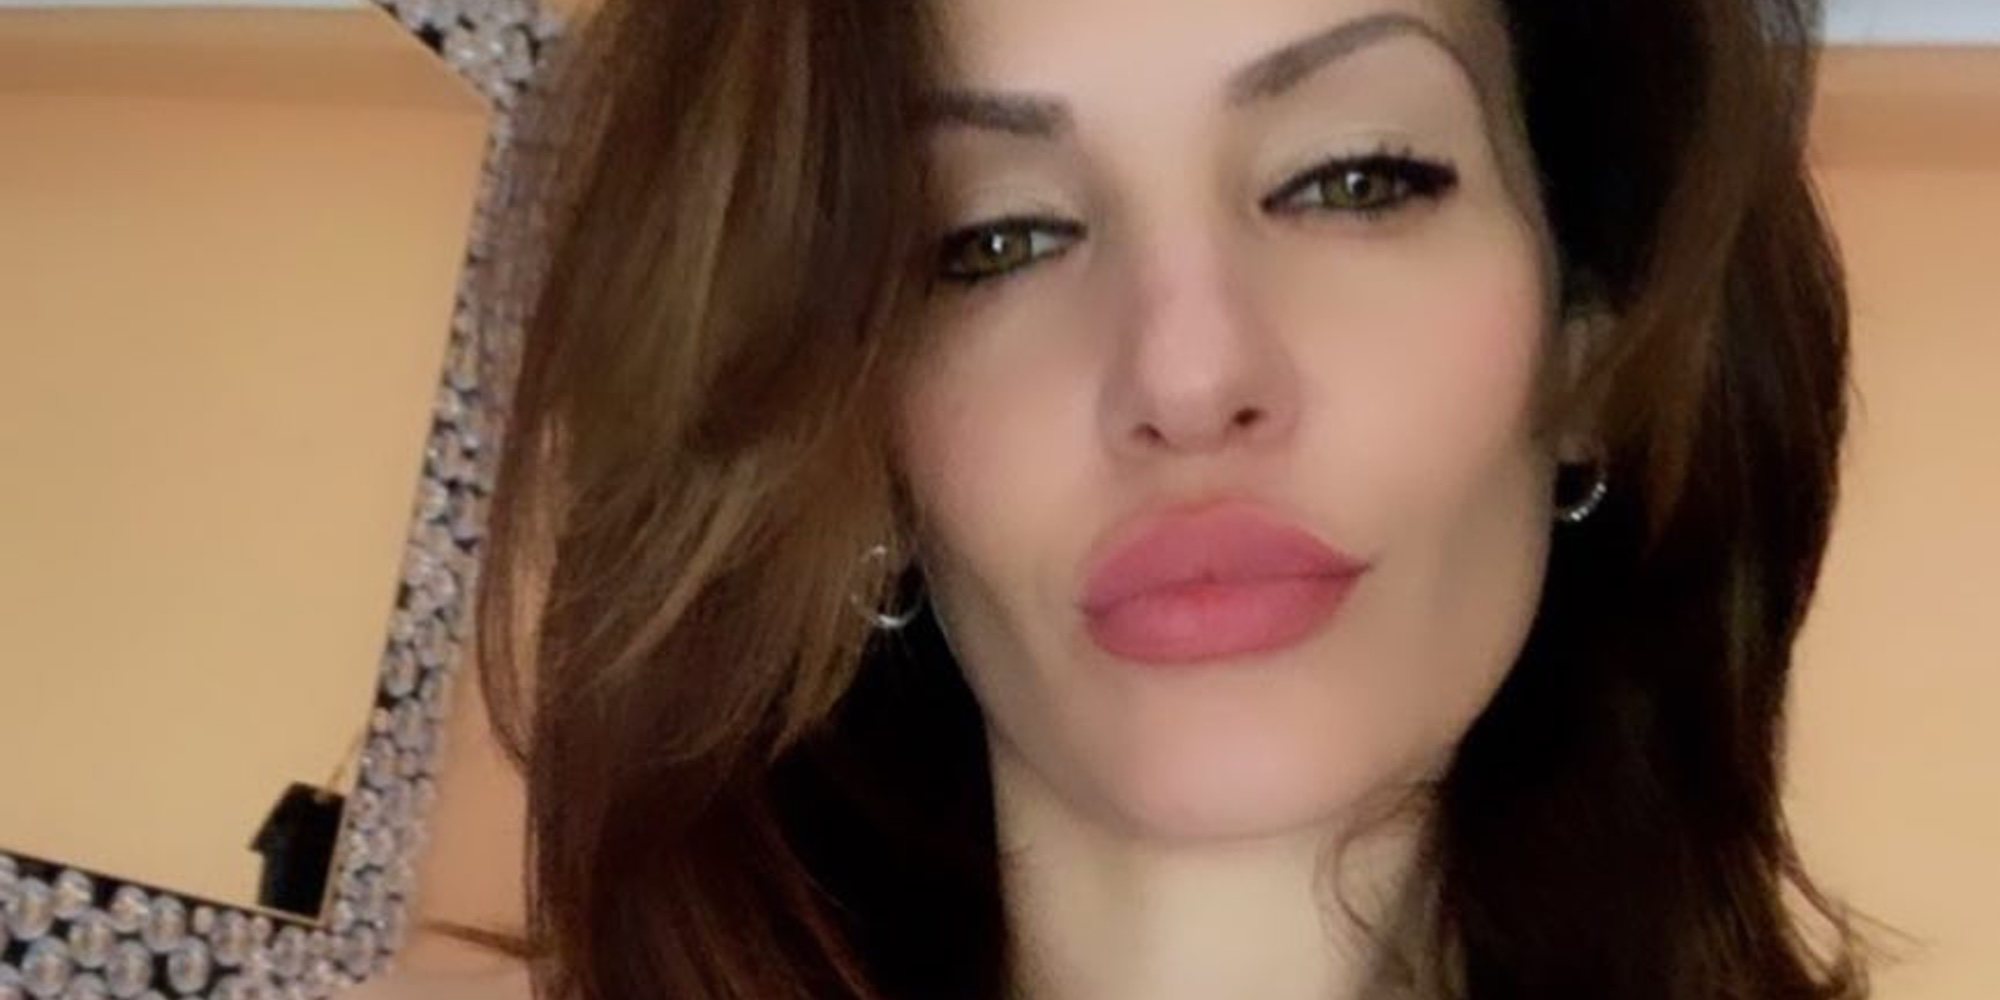 Cristina Pujol confirma que tiene nuevo novio tras romper con Kiko Matamoros